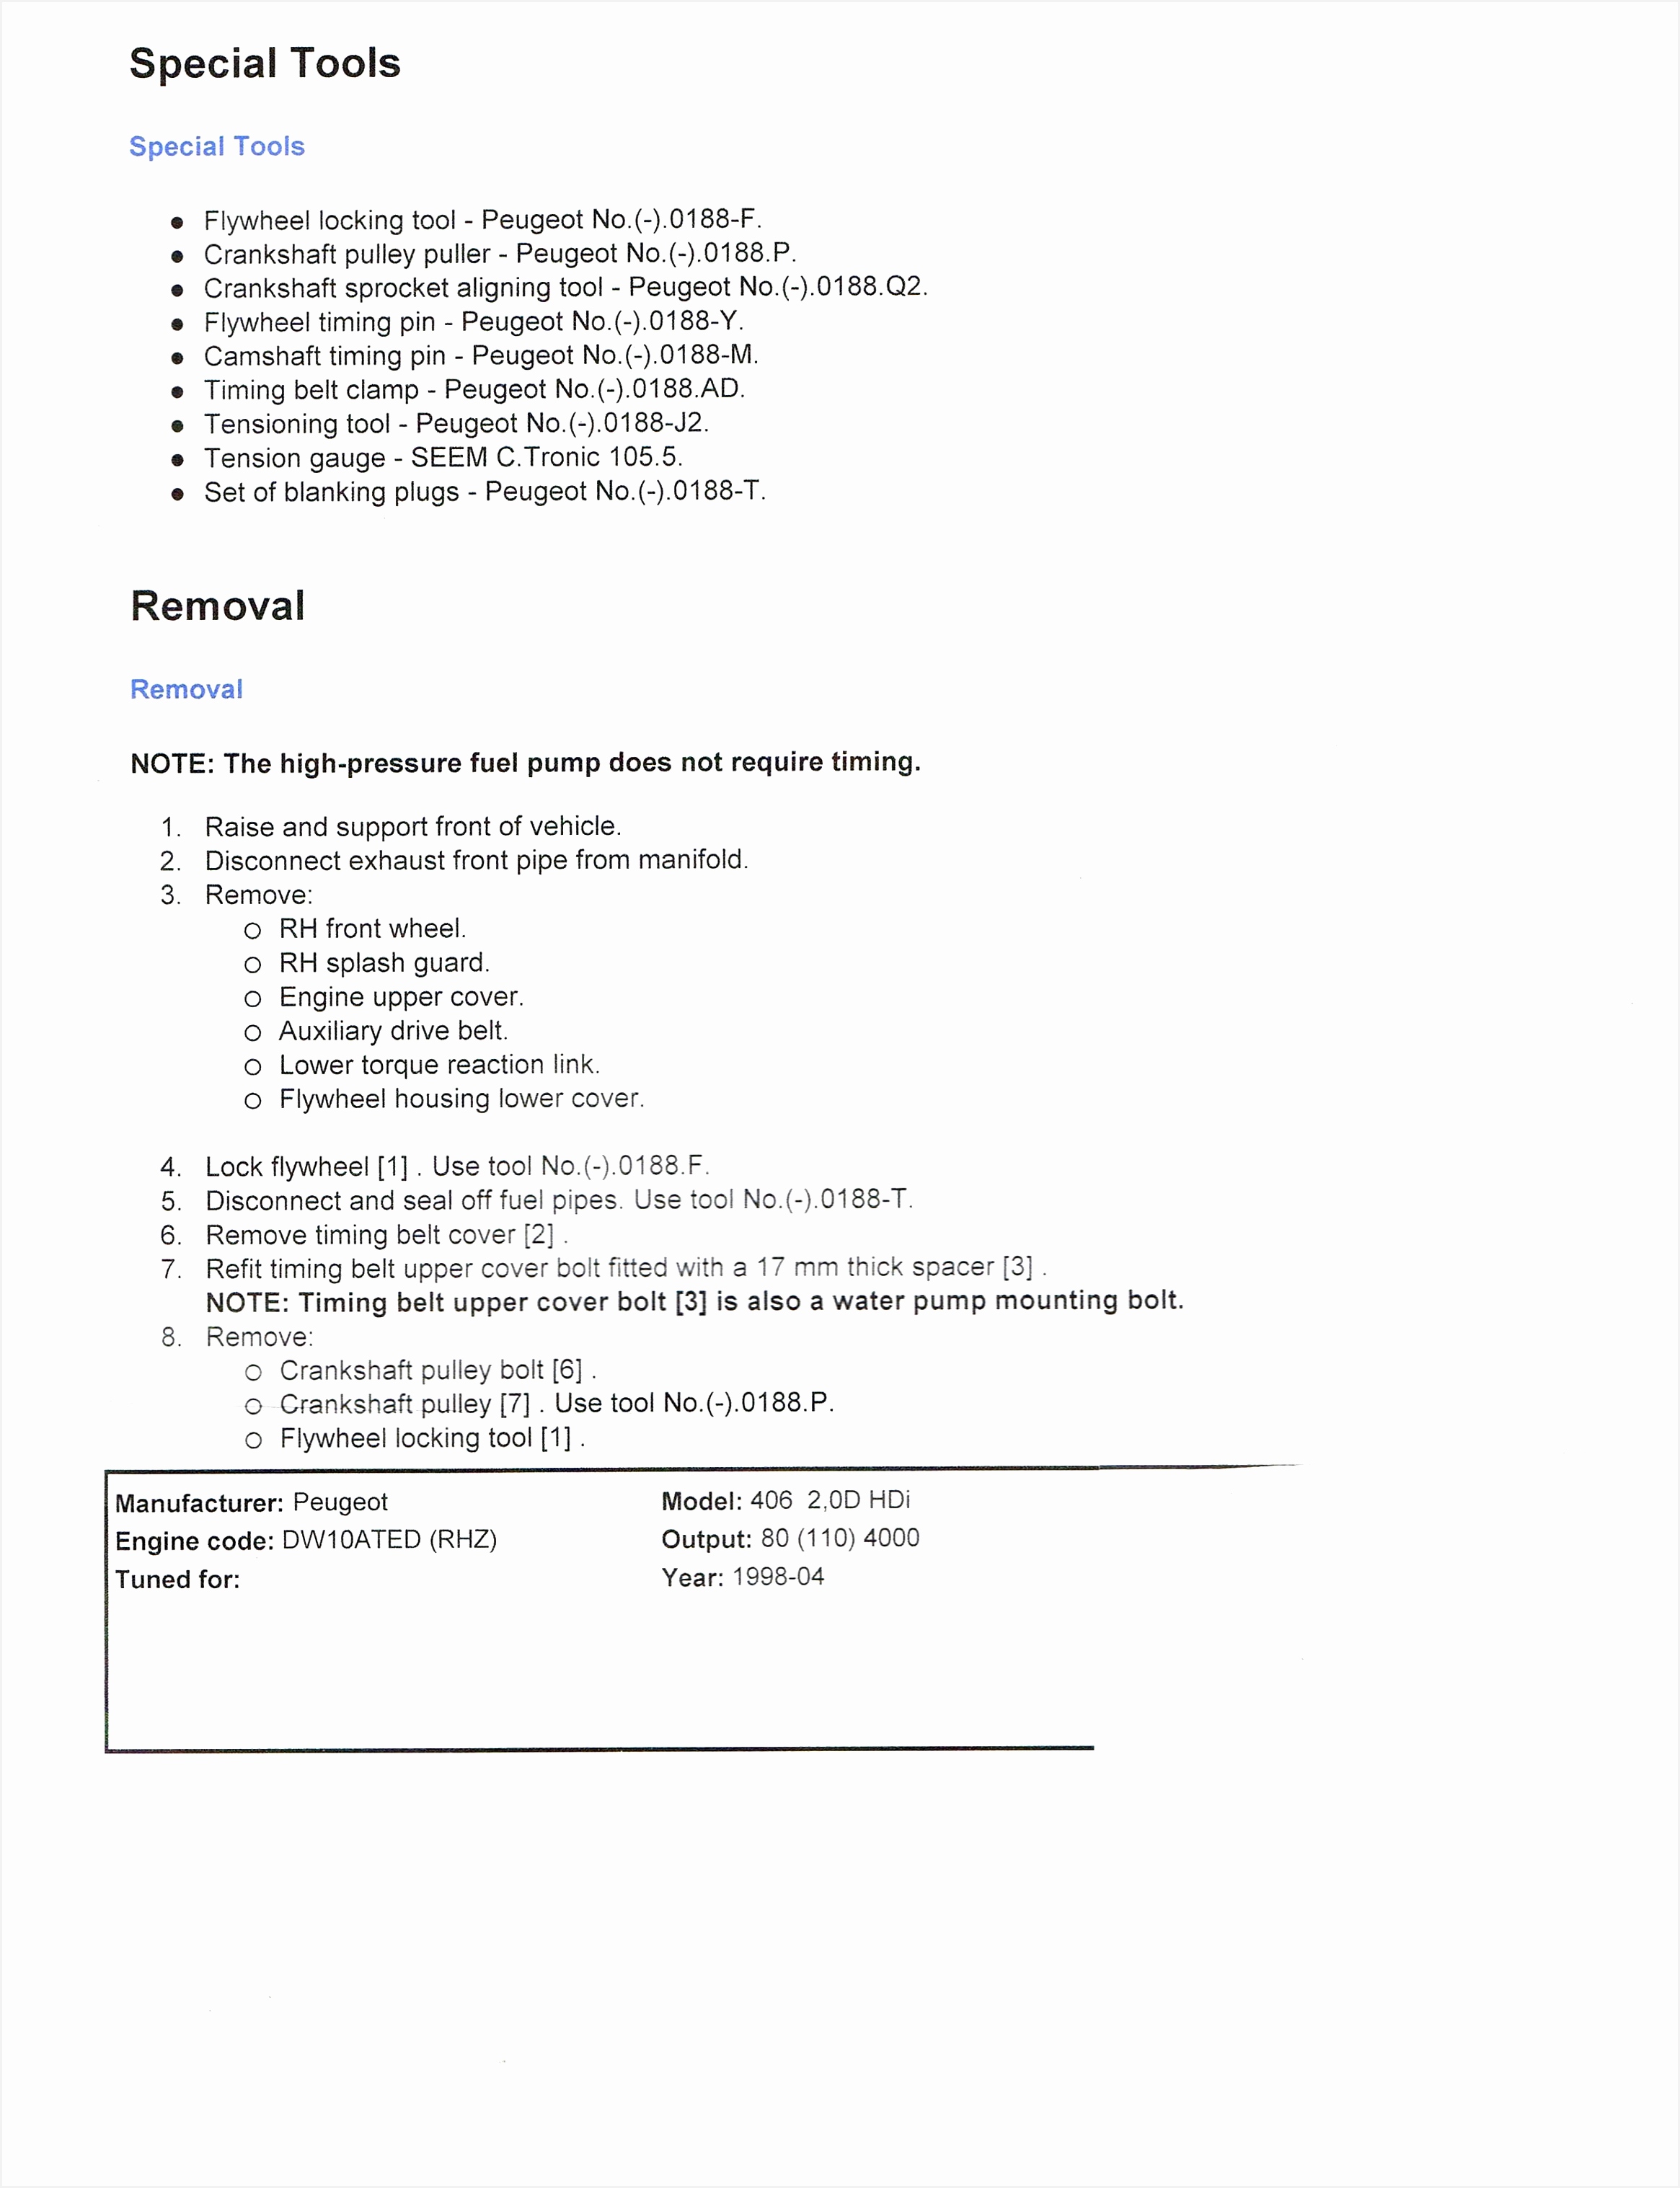 Hints for Good Resumes Sample Chemist Resume Download Free Hints for A Good Resume Best format 303523300ekEe